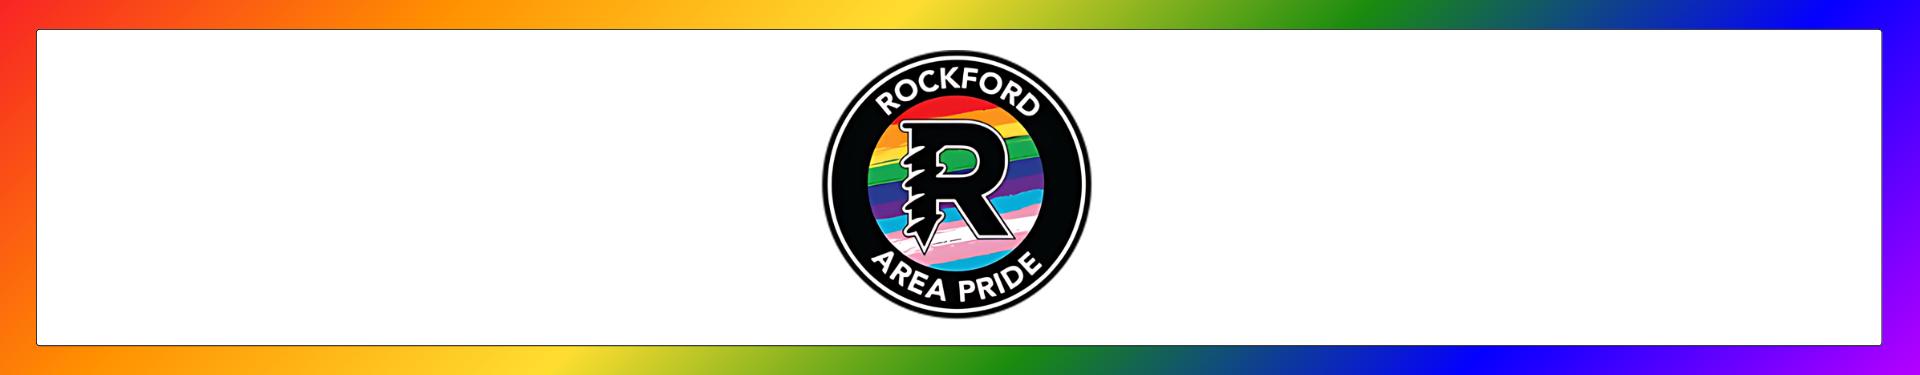 Announcing the Rockford Pride Parade Endowment